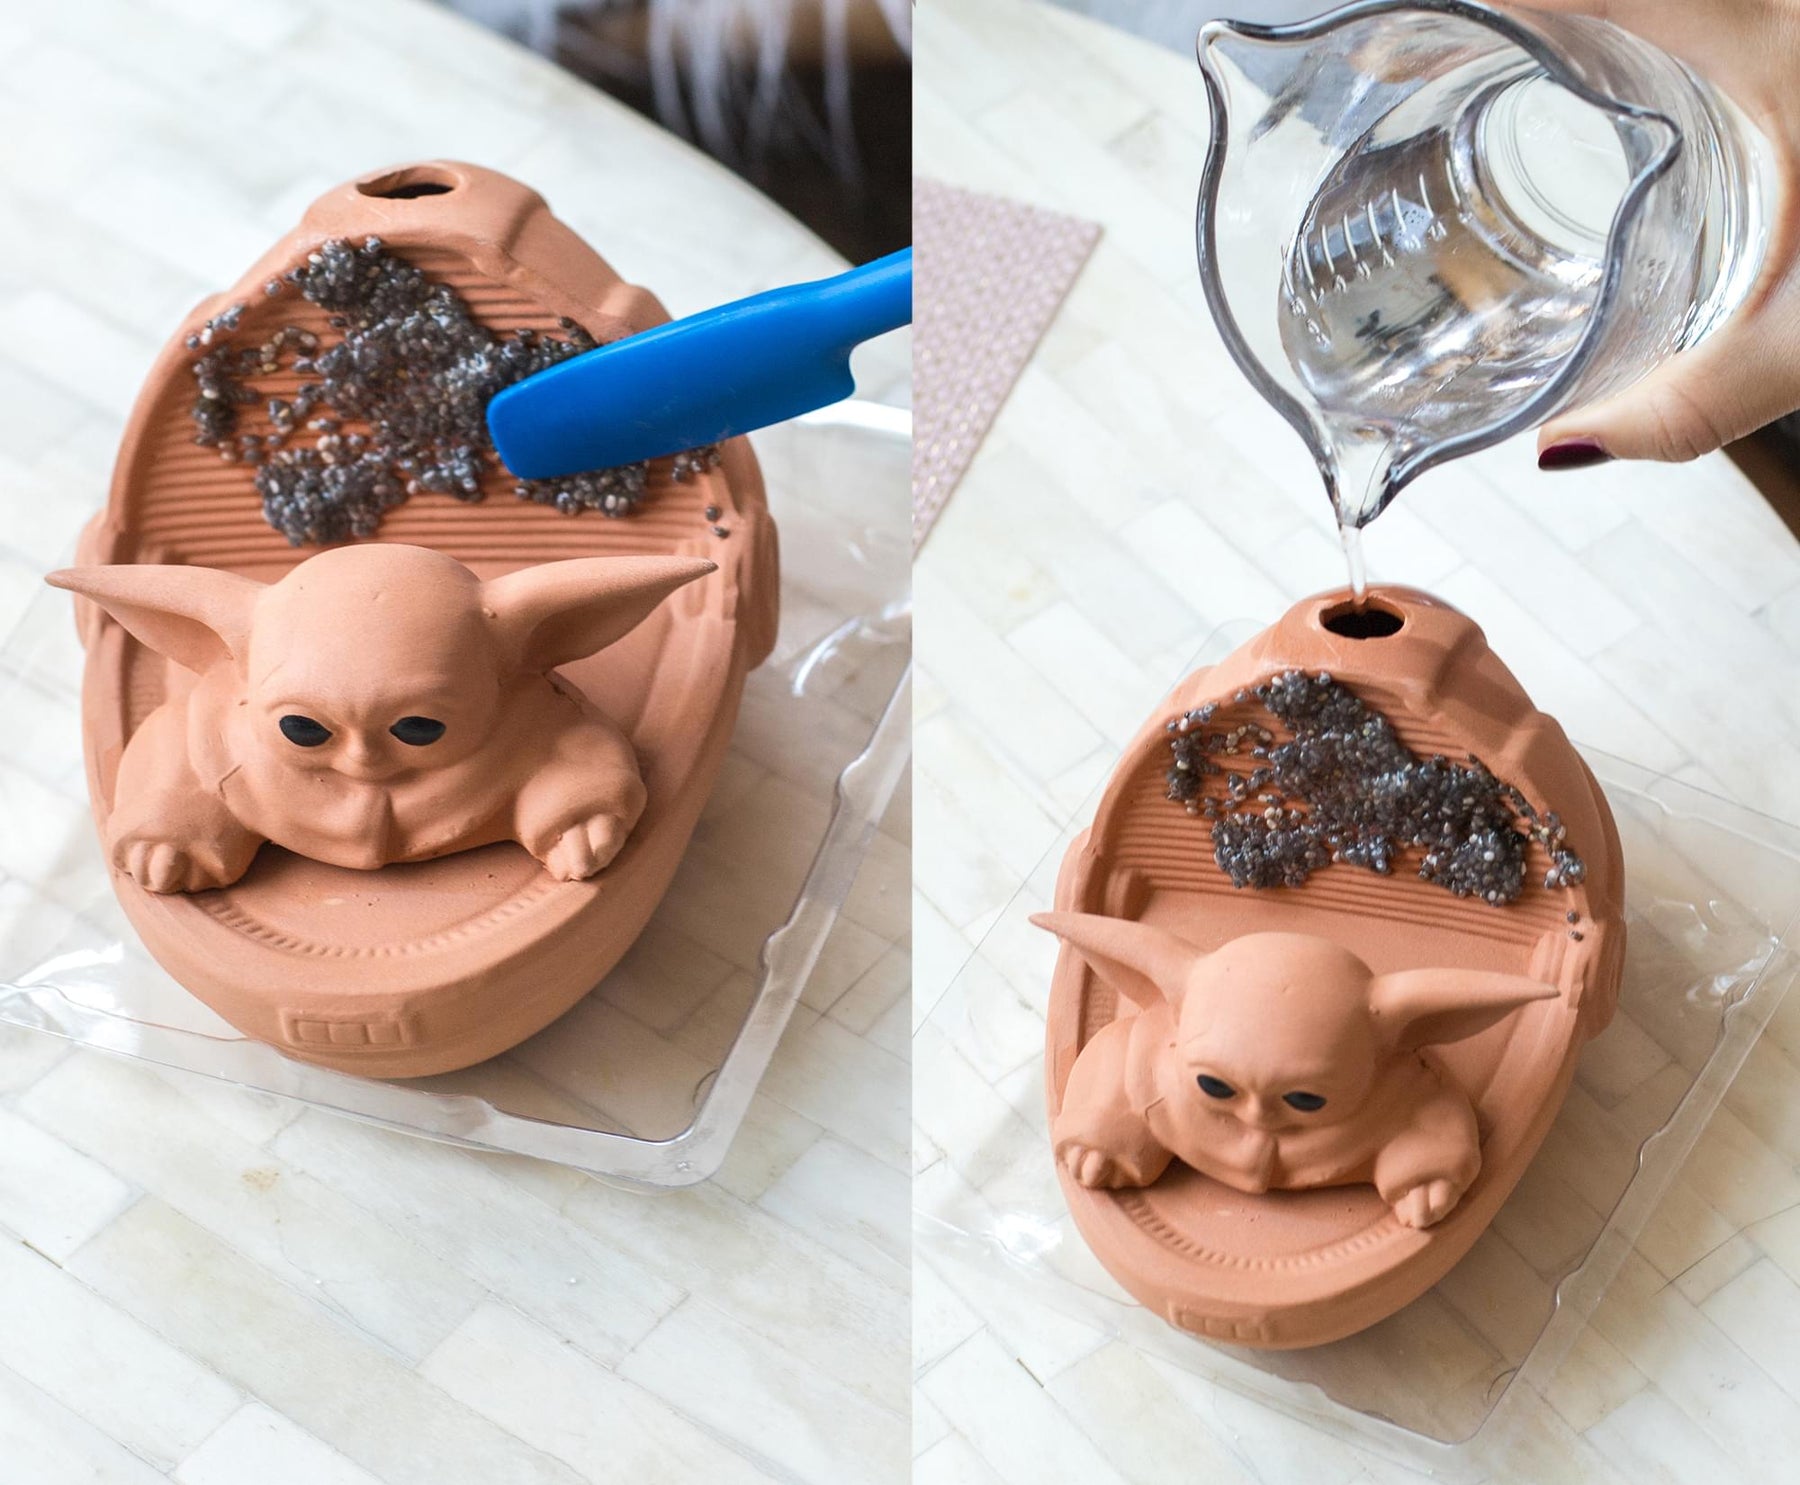 Chia Pet Bob Ross (The Joy of Painting) - Decorative Pot Easy to